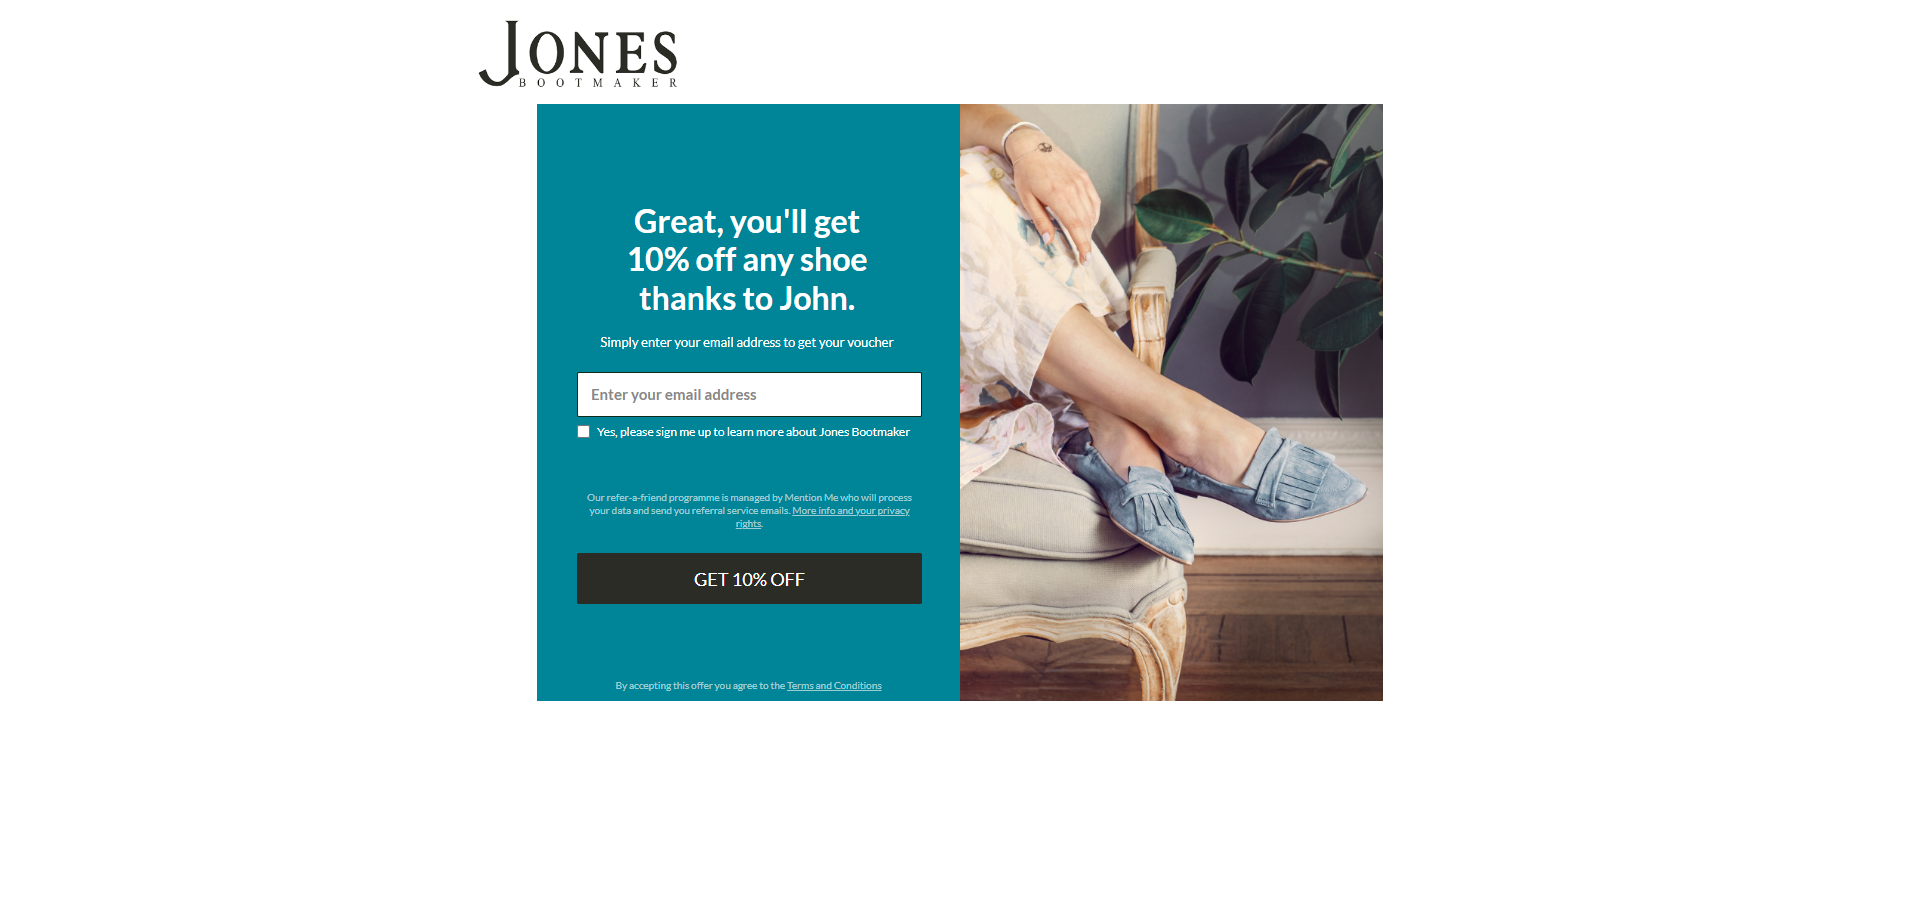 Landing Page for Jones Bootmaker